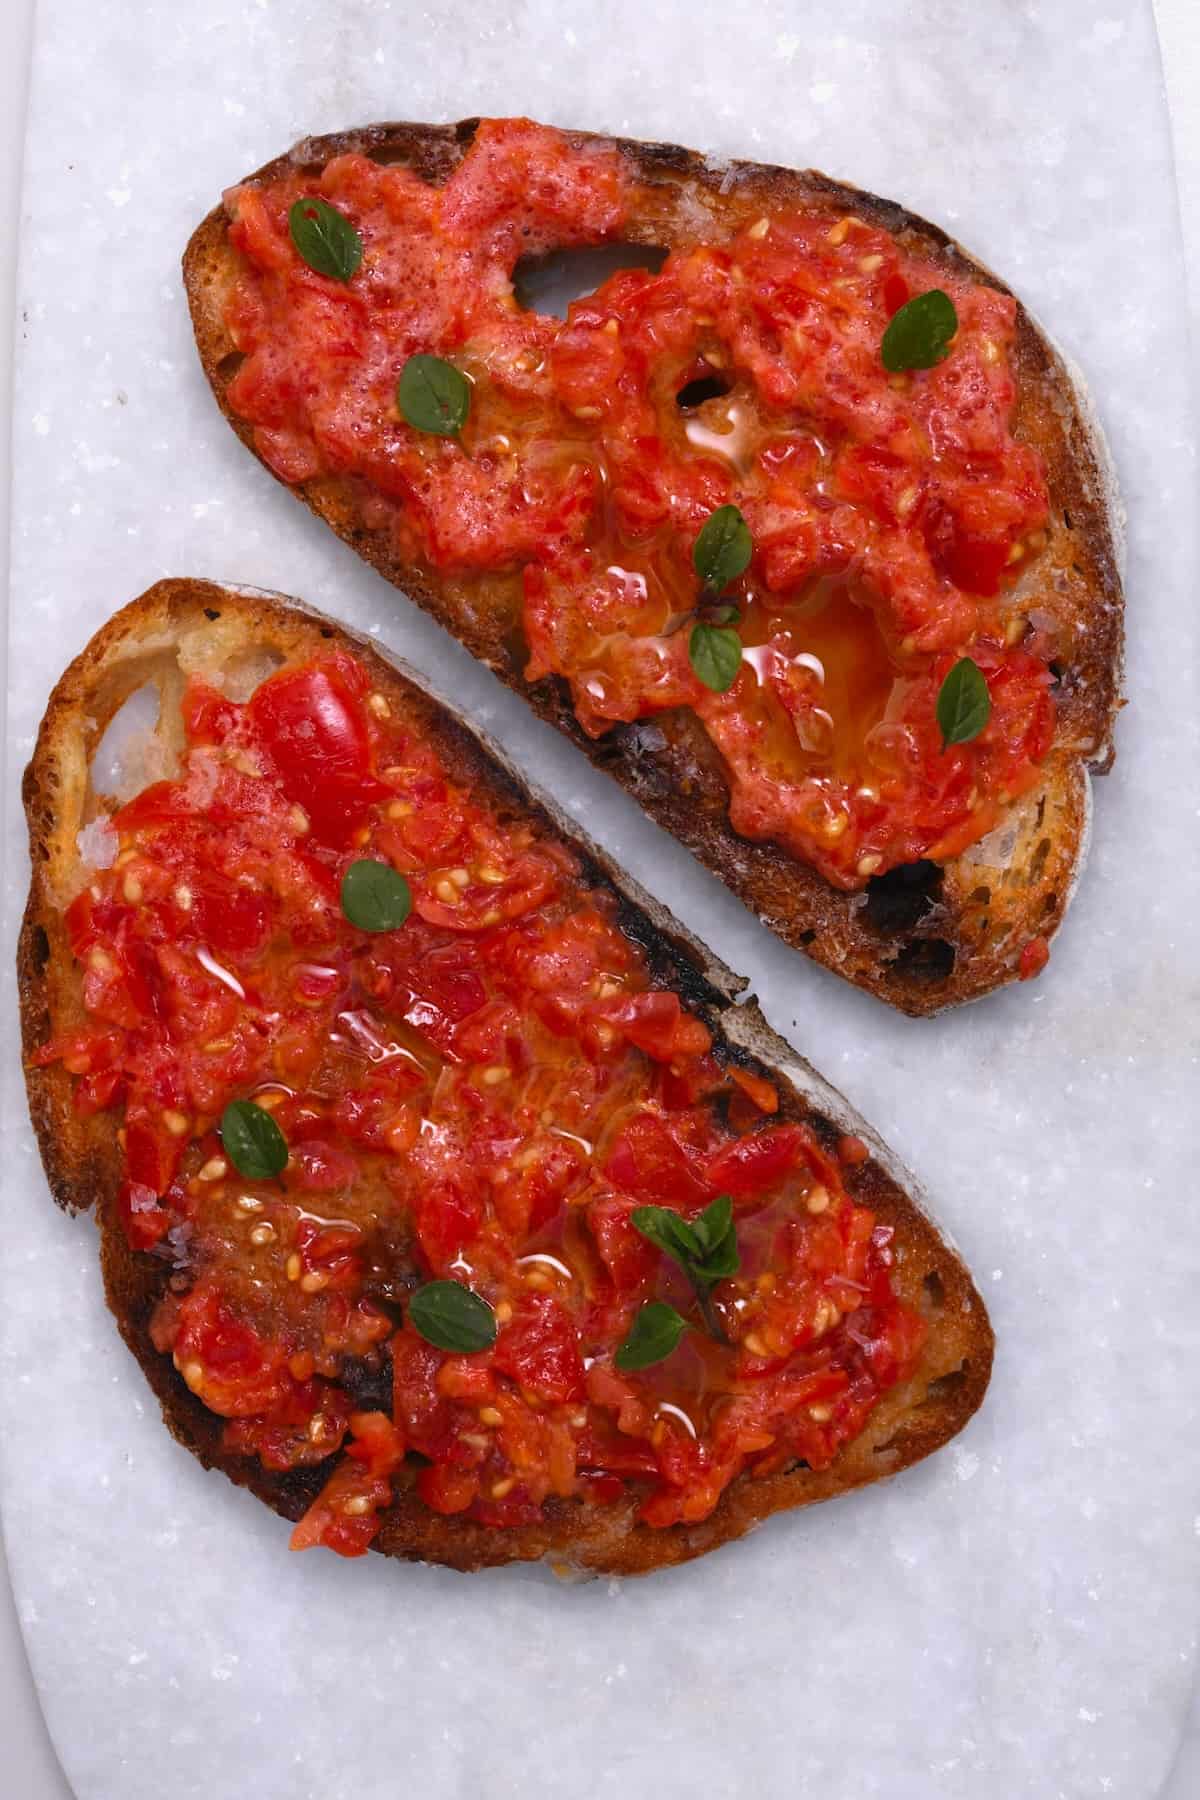 Pan con tomate - two tomato toasts